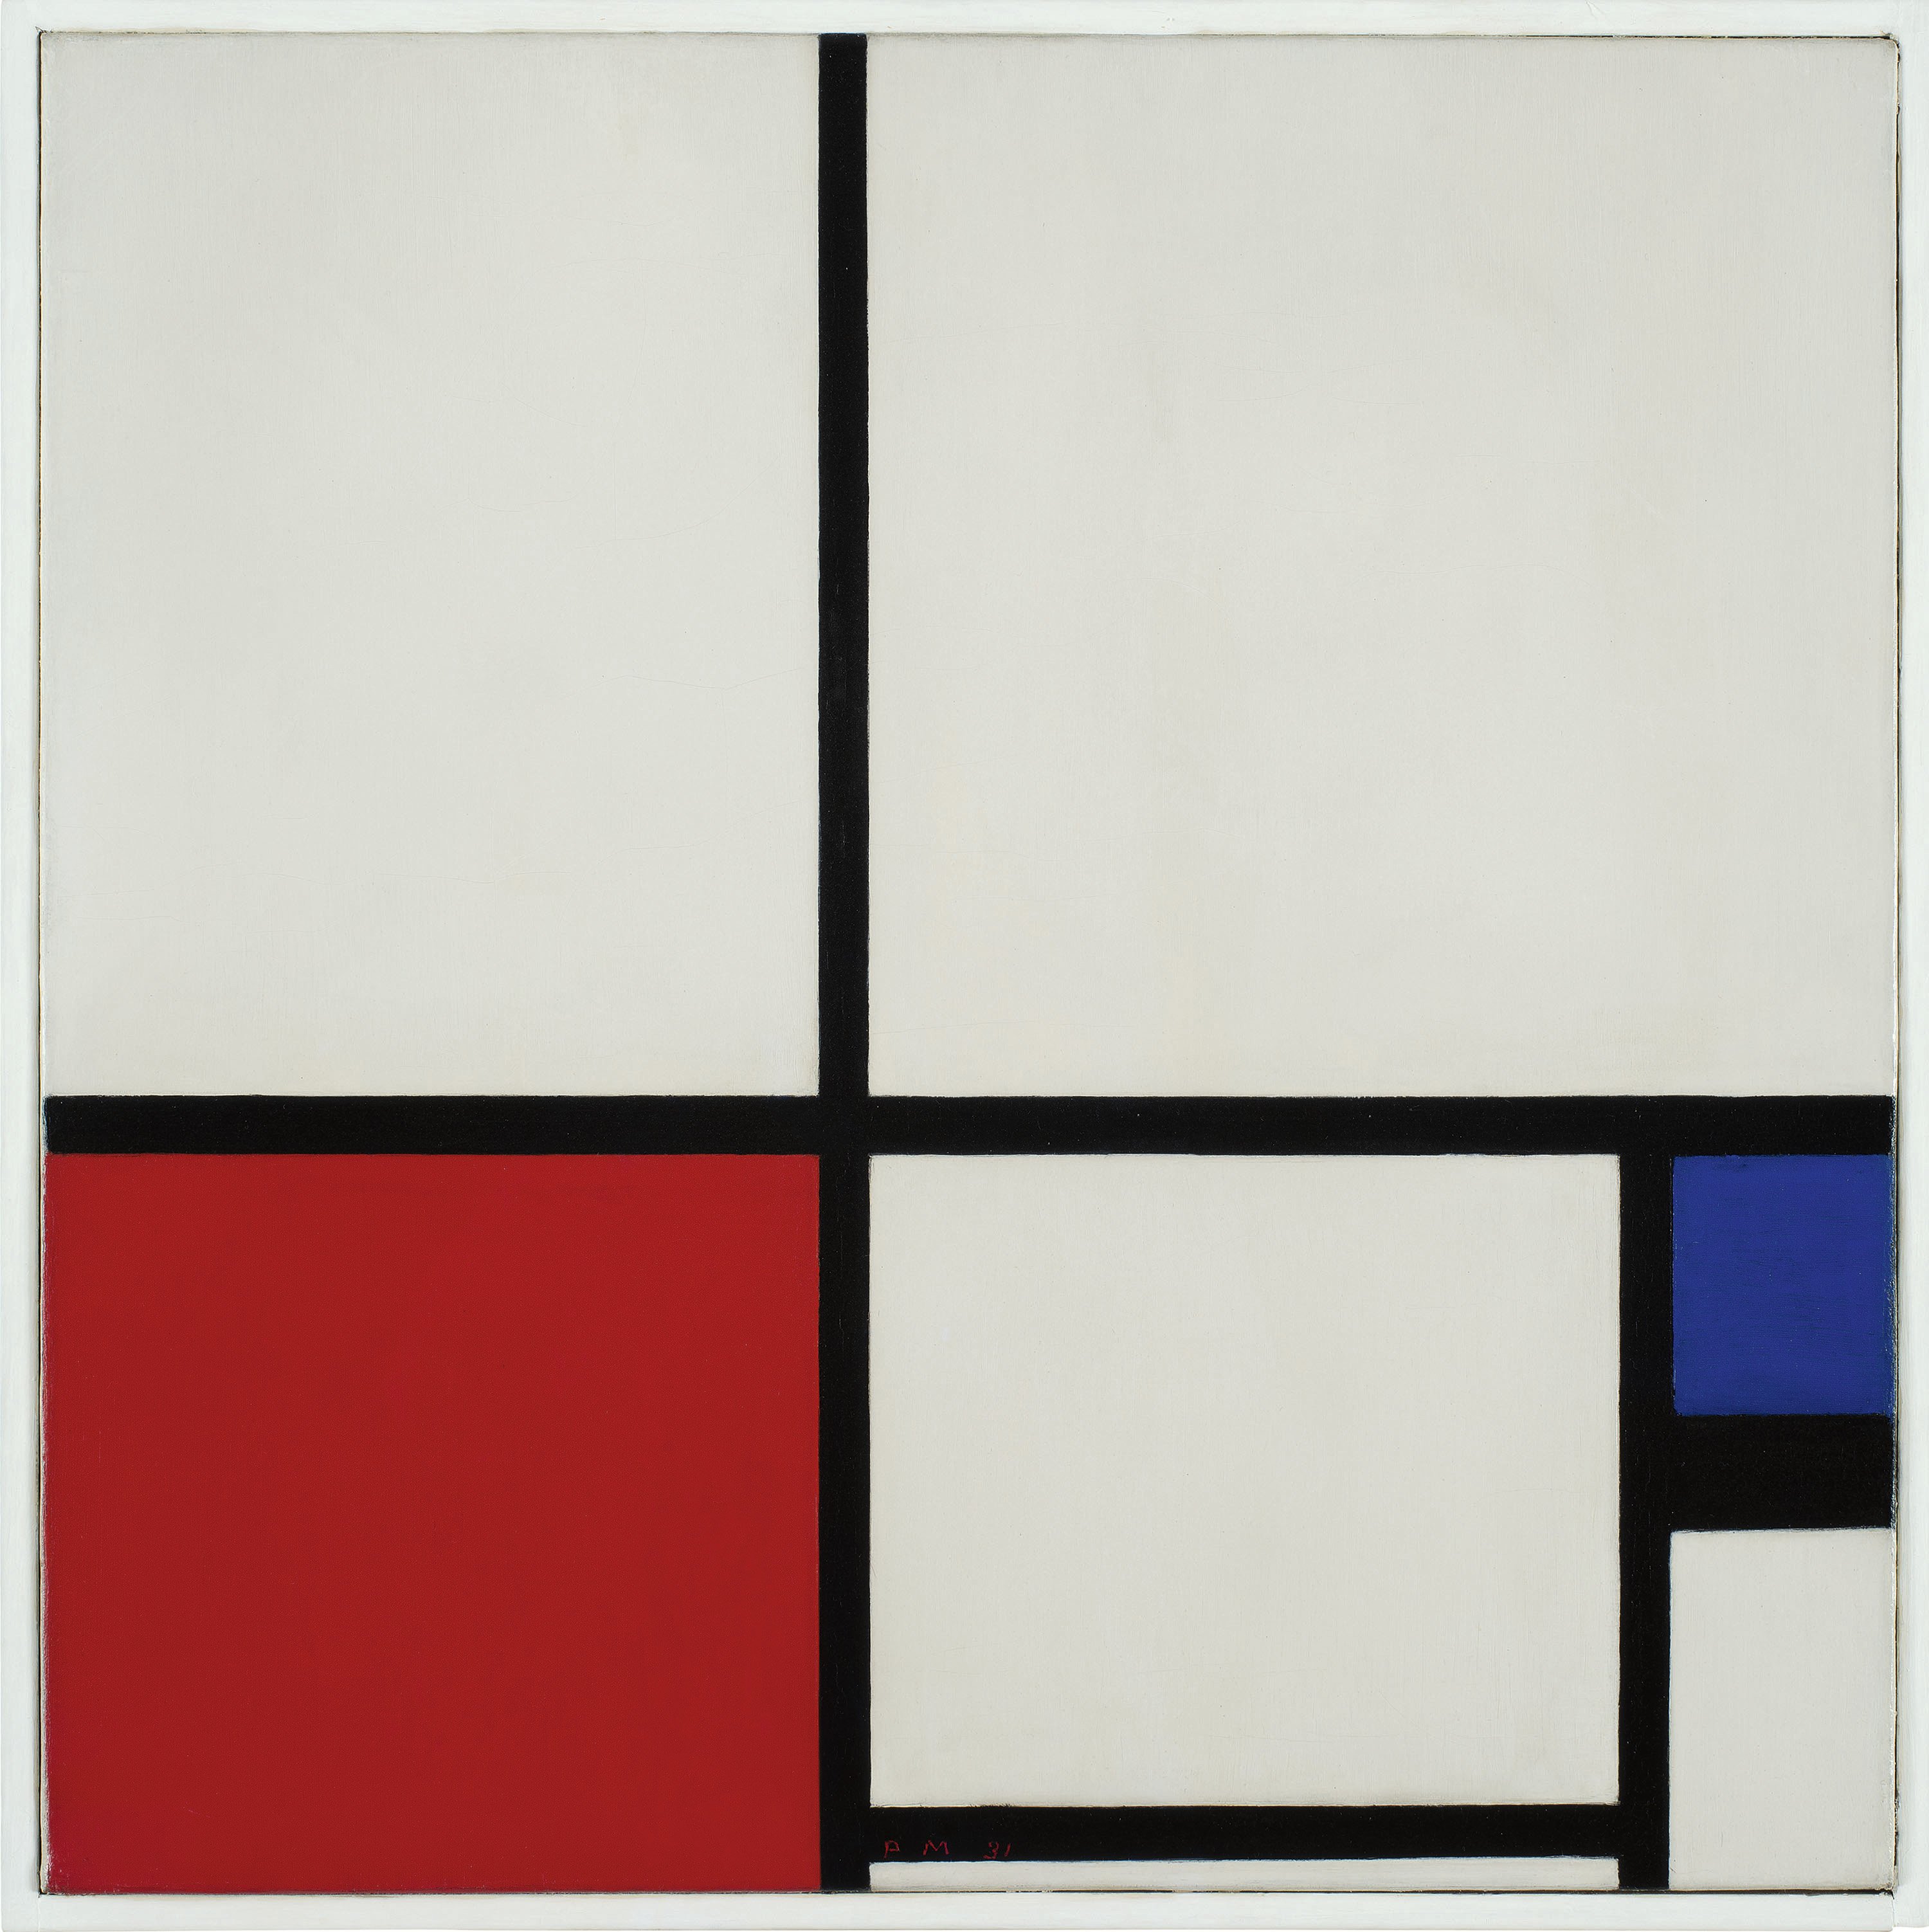 Composition in Colours / Composition No. I with Red and Blue. Composición de colores / Composición nº I con rojo y azul, 1931